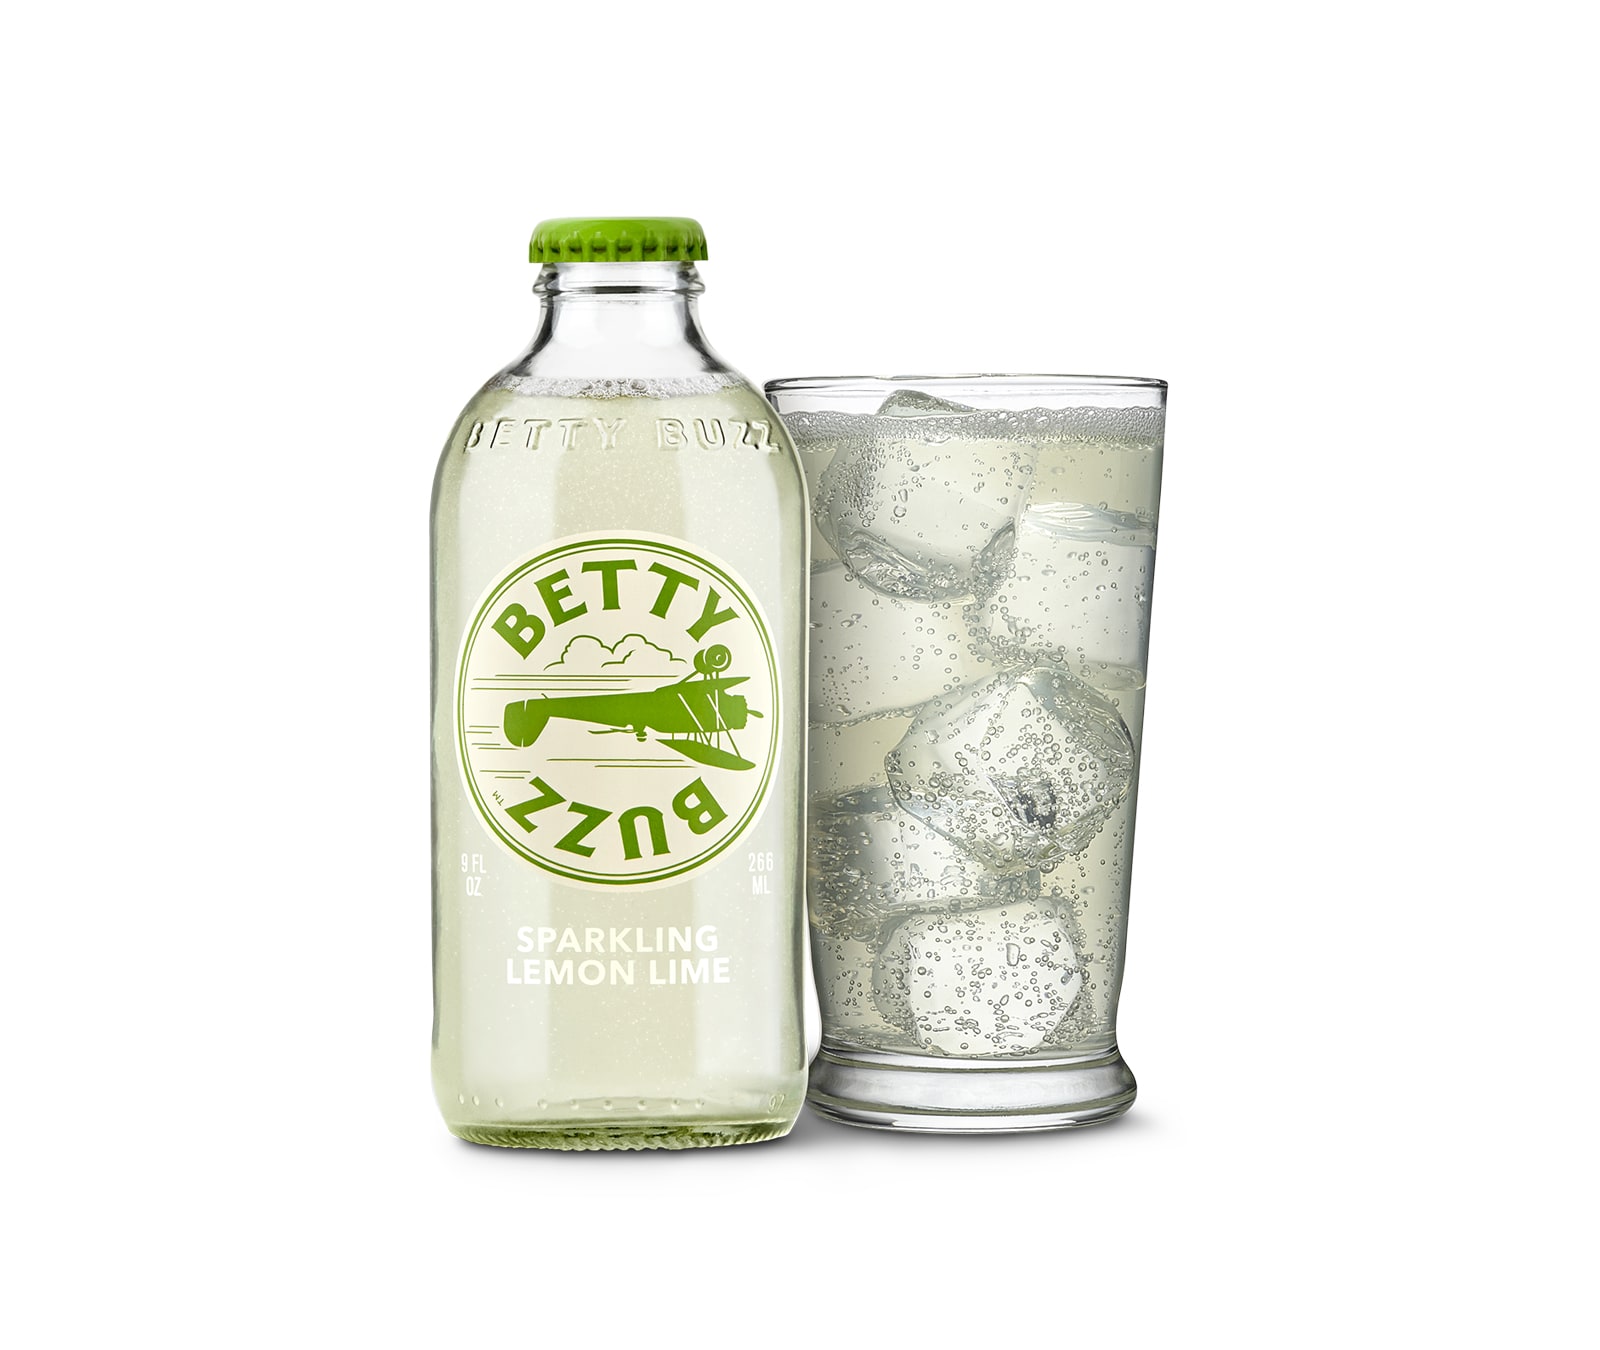 Betty Buzz Lemon lime bottle package design